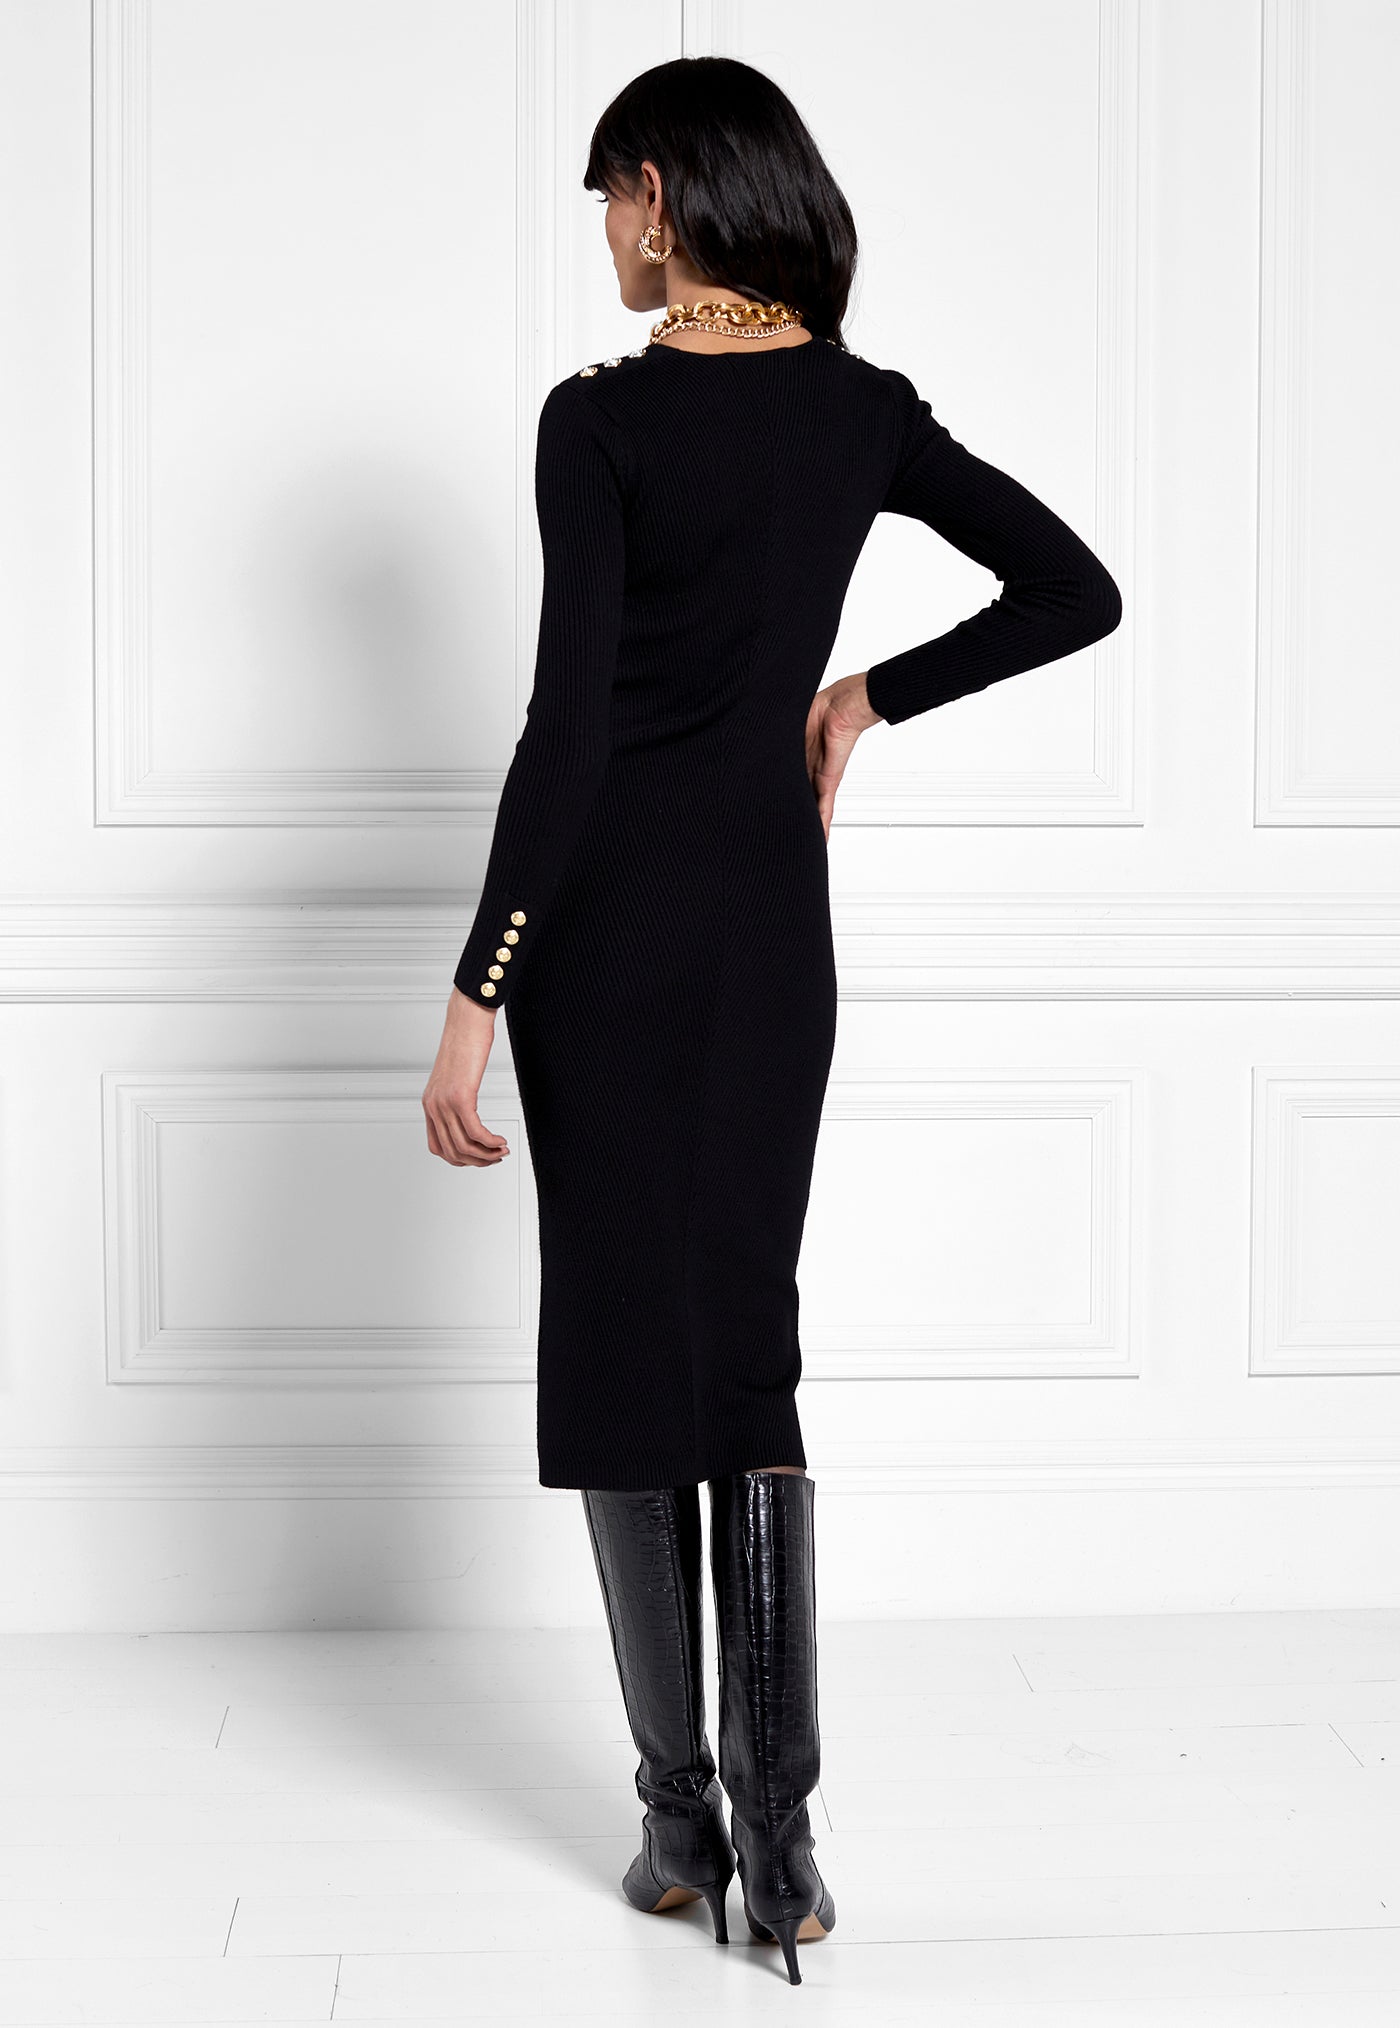 Kensington Vee Neck Midi Dress - Black sold by Angel Divine